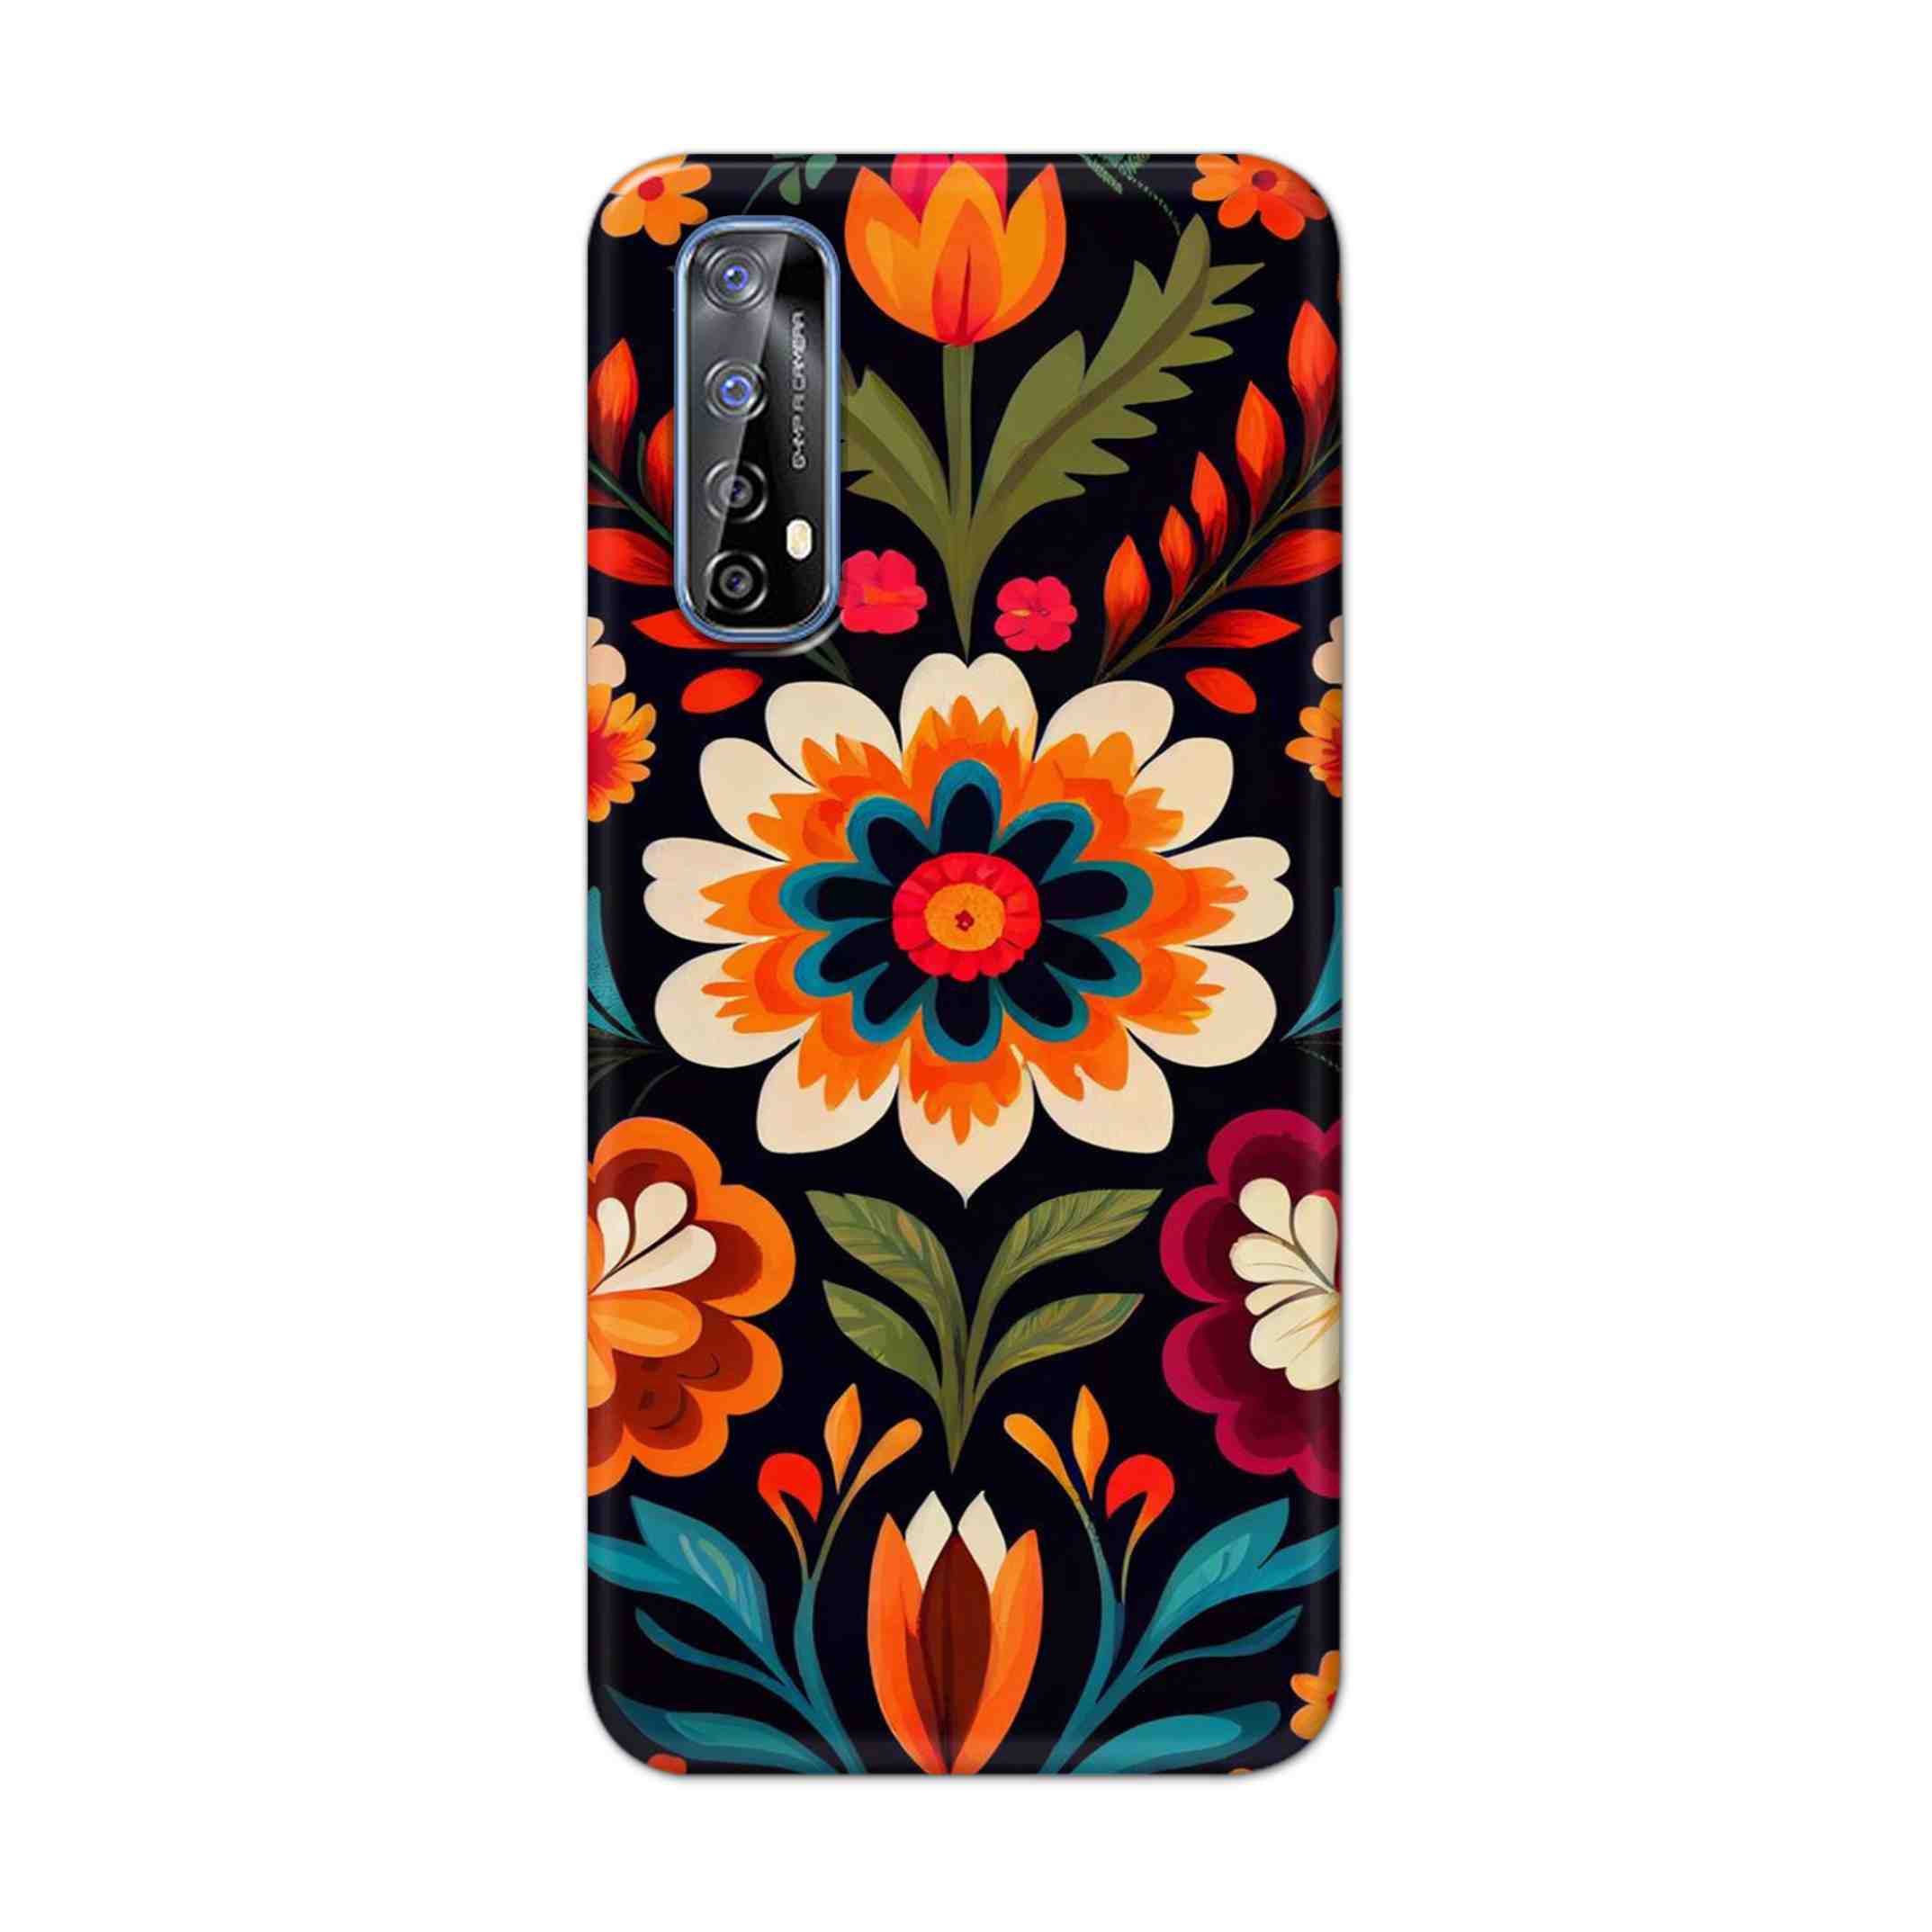 Buy Flower Hard Back Mobile Phone Case Cover For Realme 7 Online